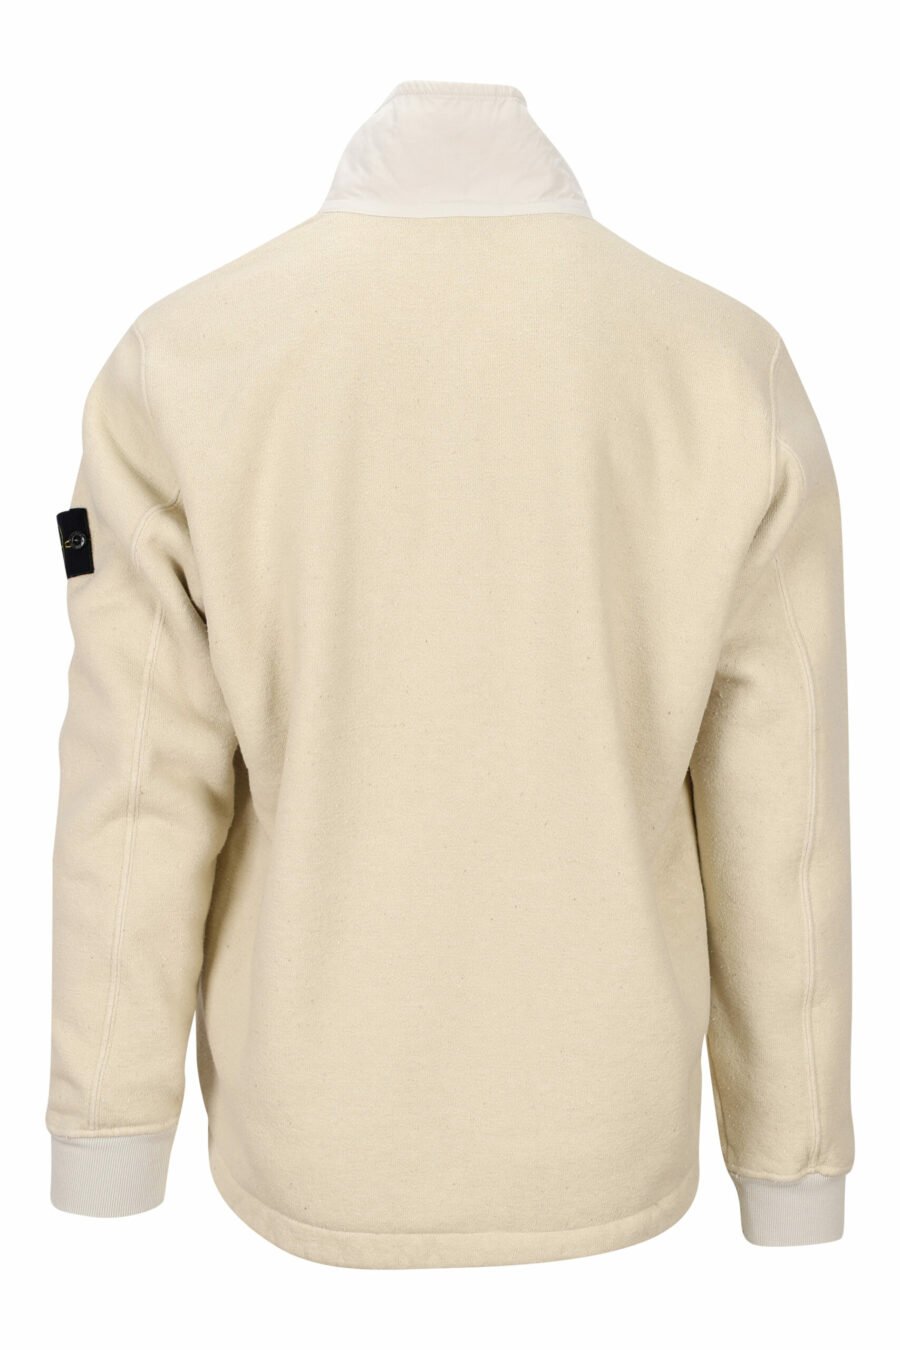 Beige mix sweatshirt with zip and fleece collar - 8052572757938 2 scaled